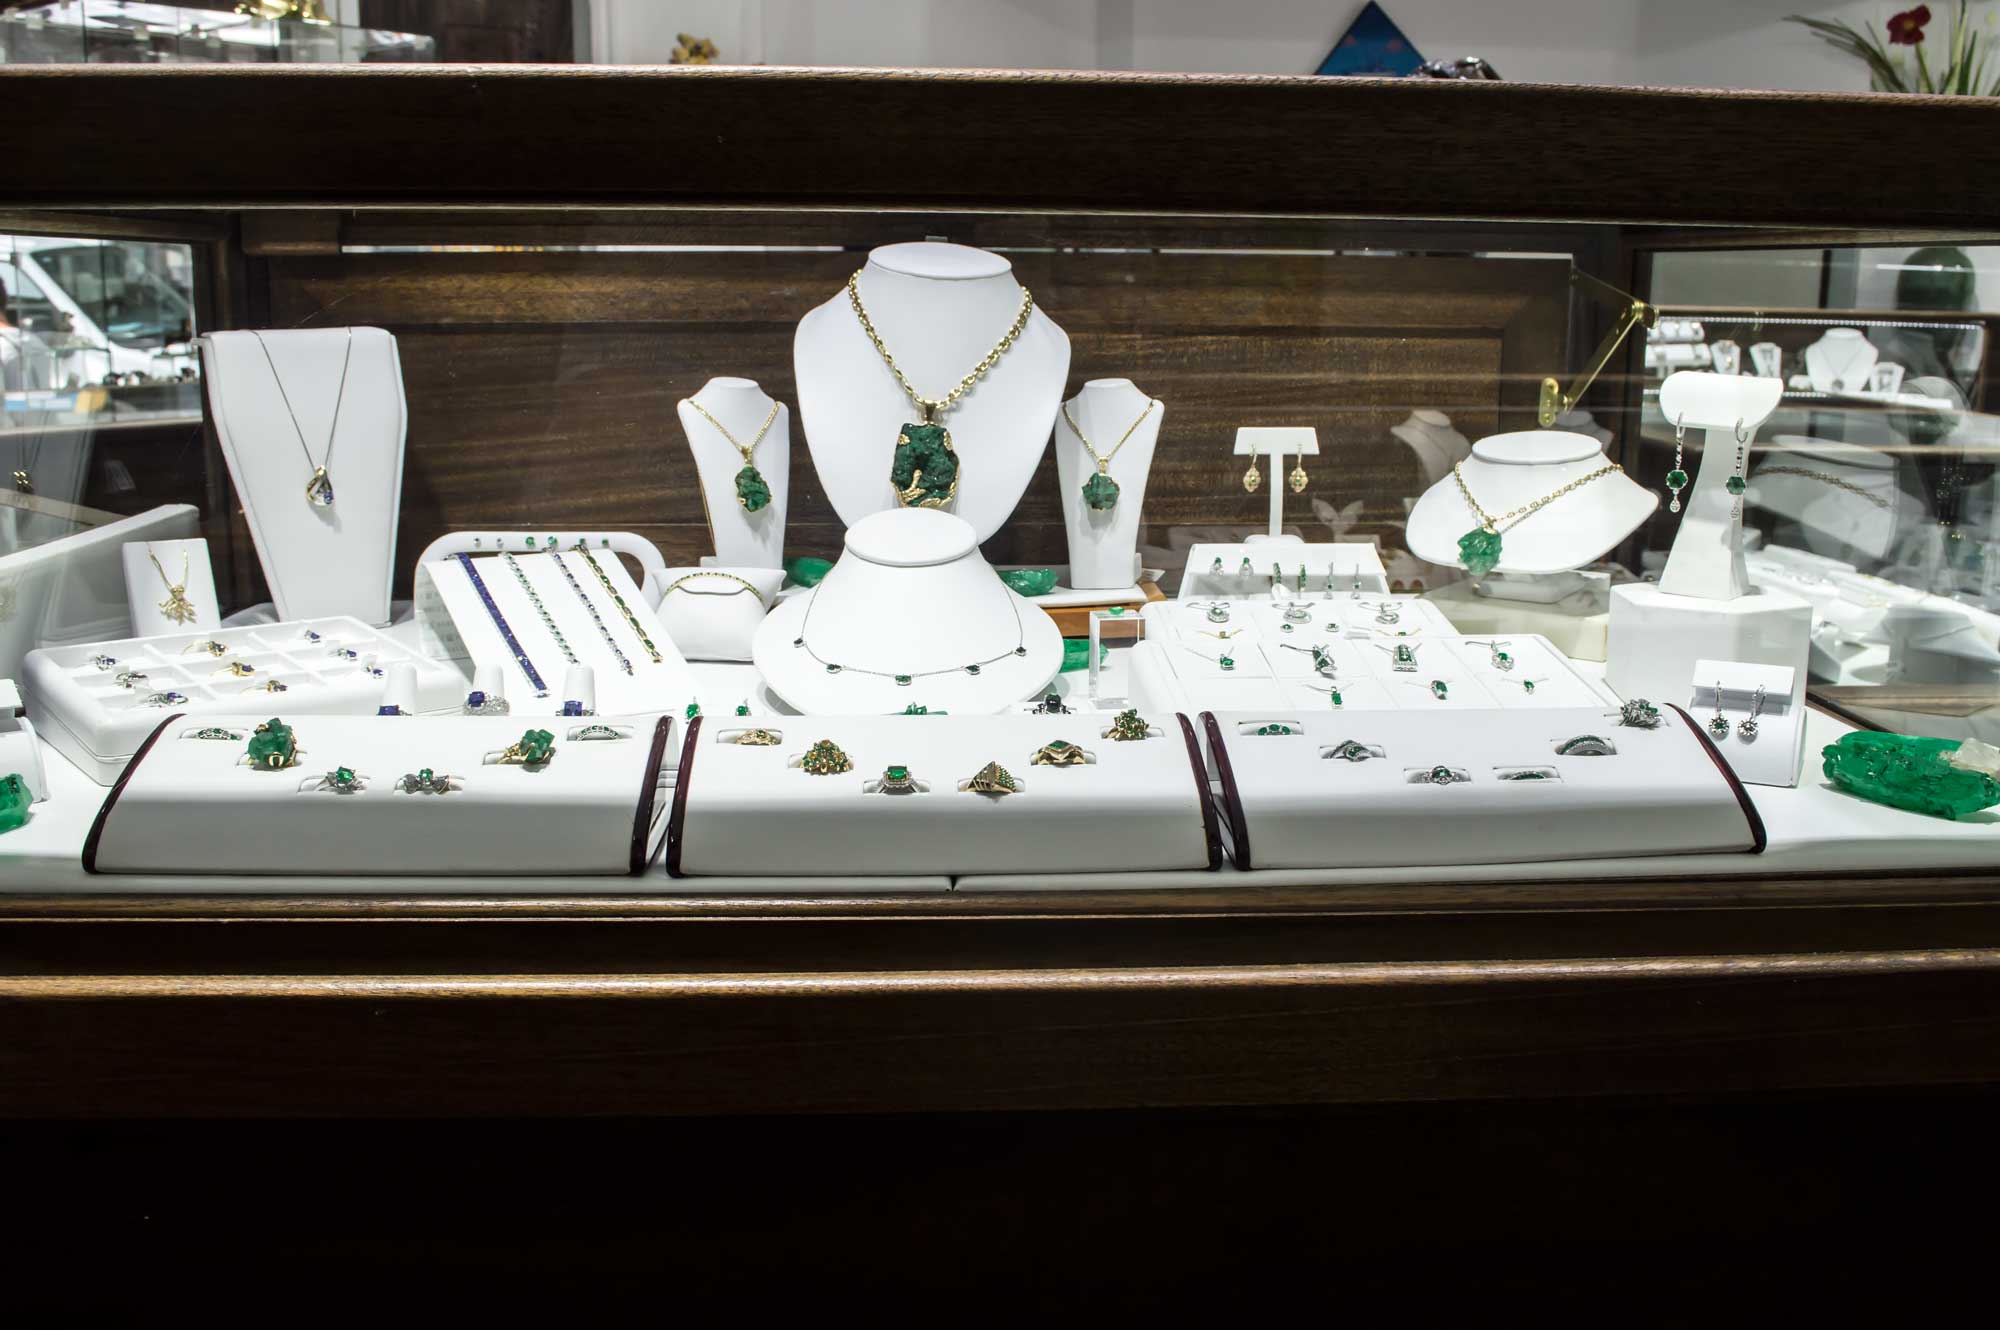 Emeralds and gemstones